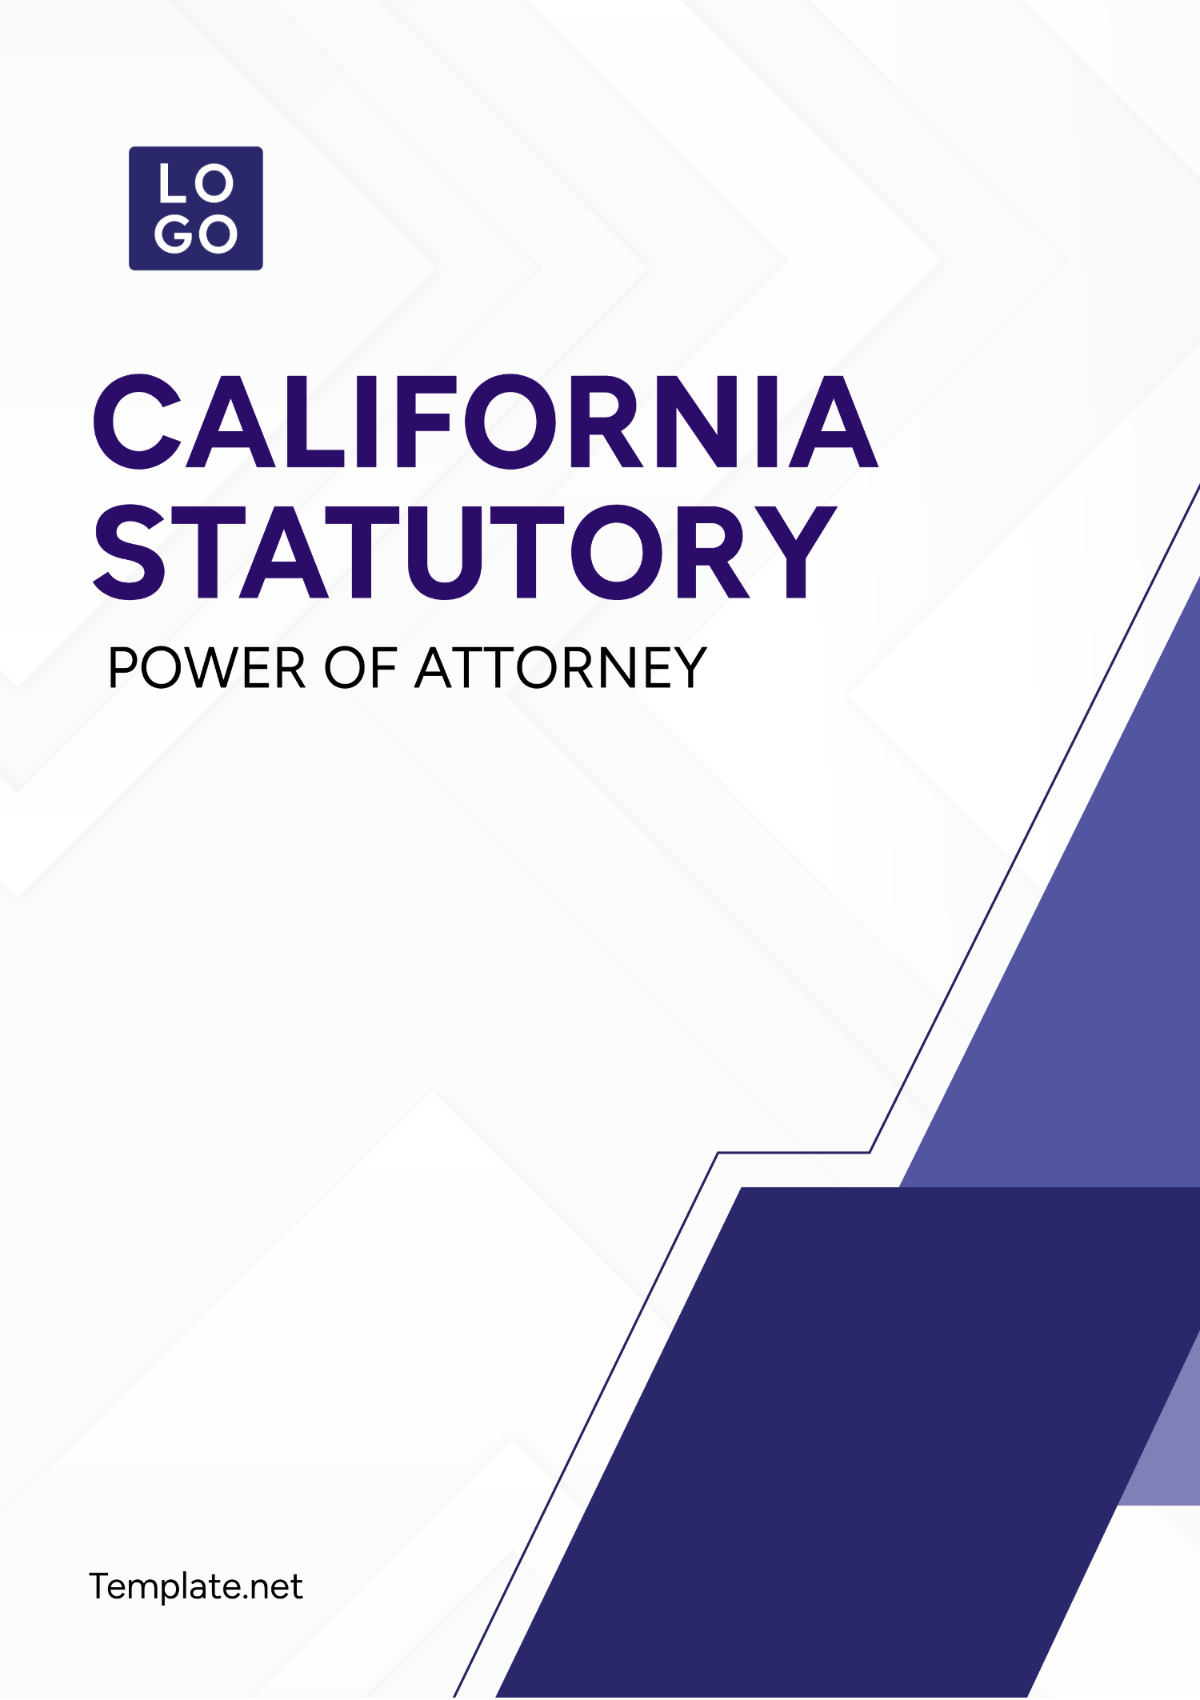 California Statutory Power of Attorney Template